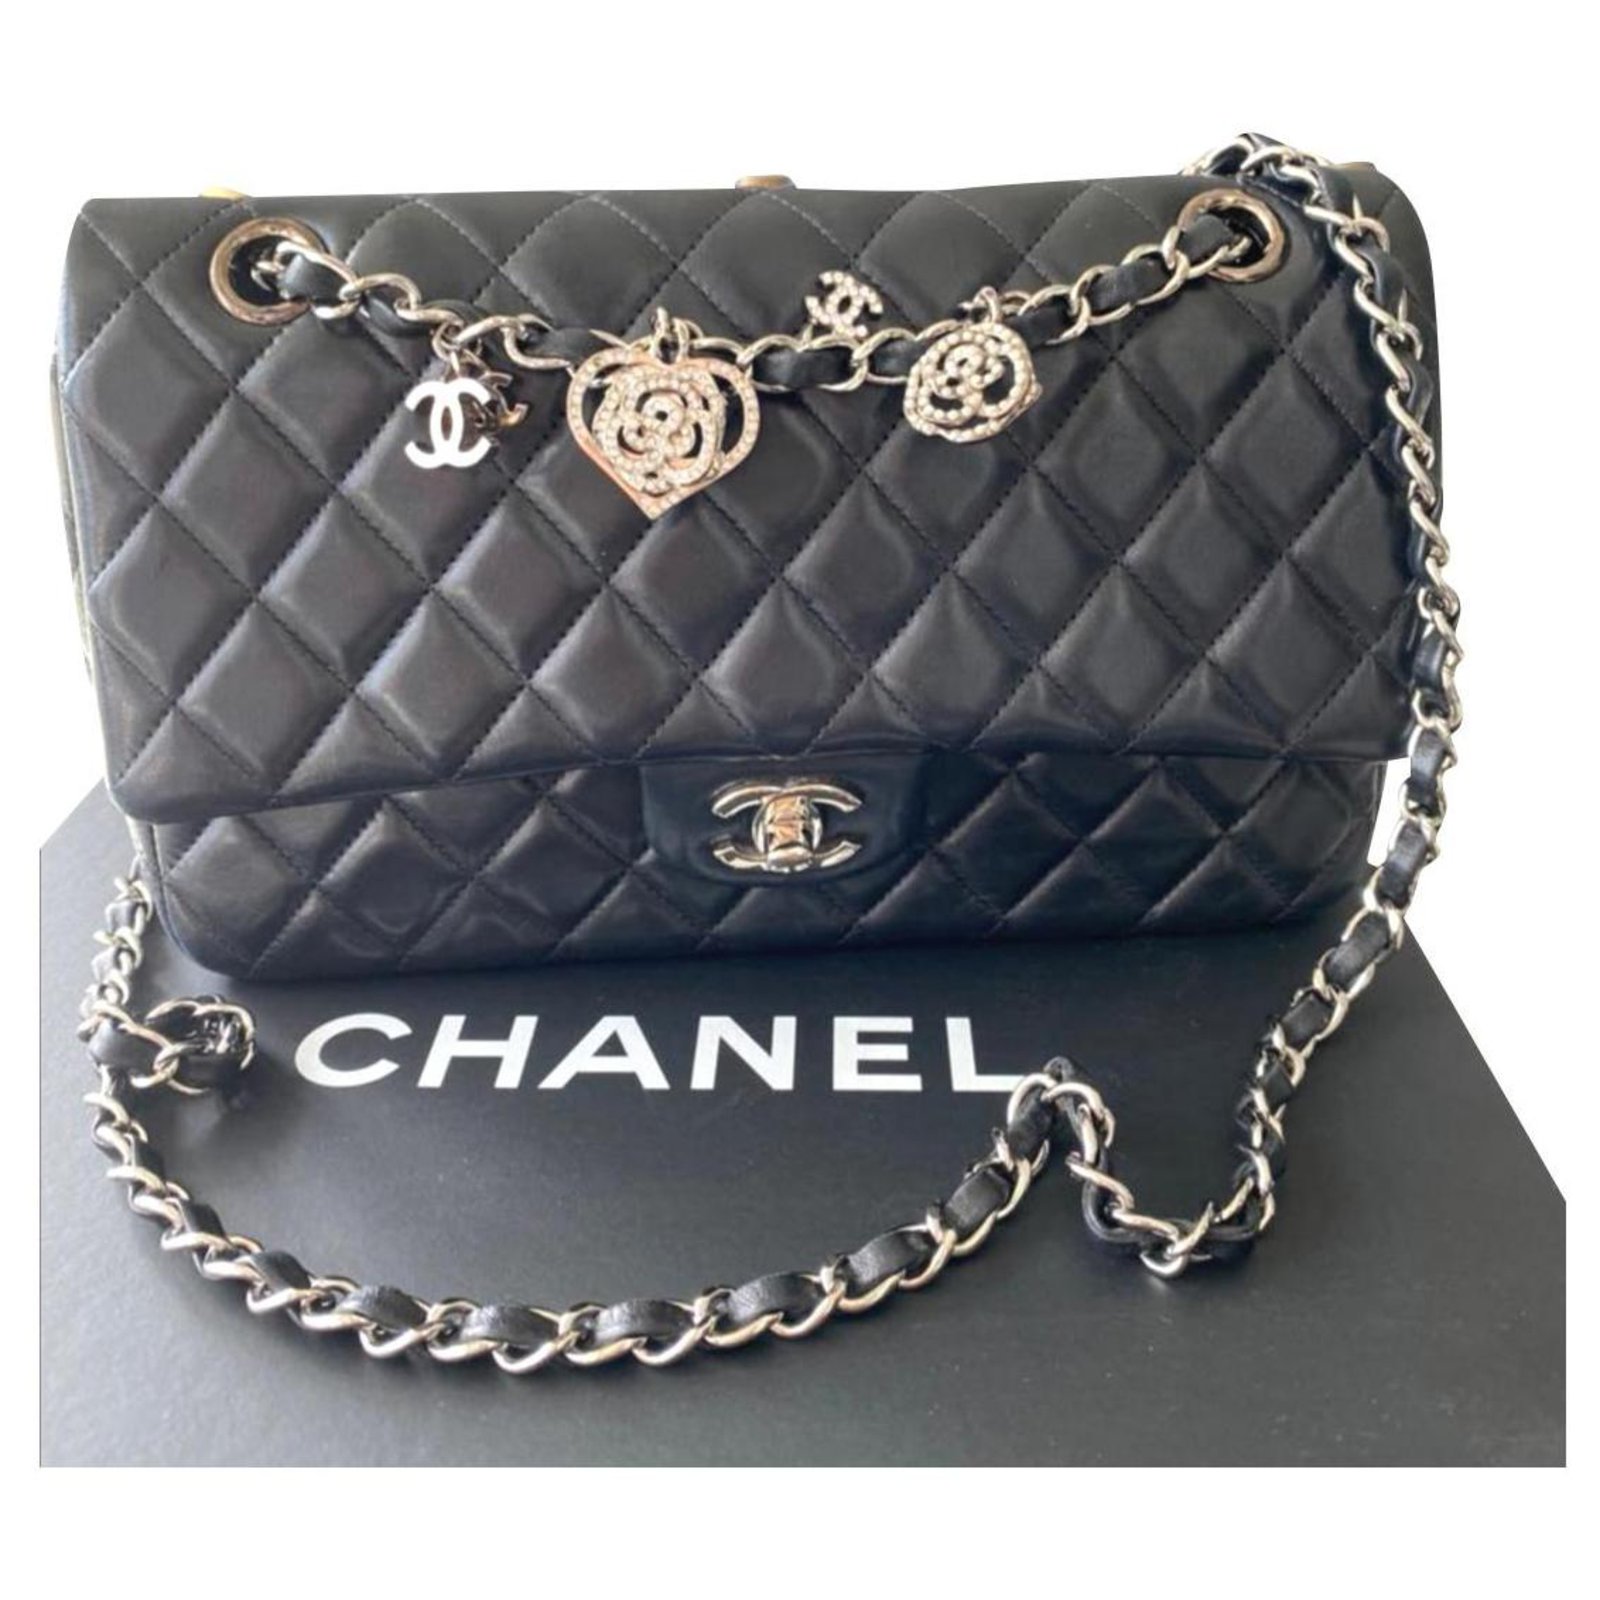 Limited Edition Chanel Valentine classic medium flap bag